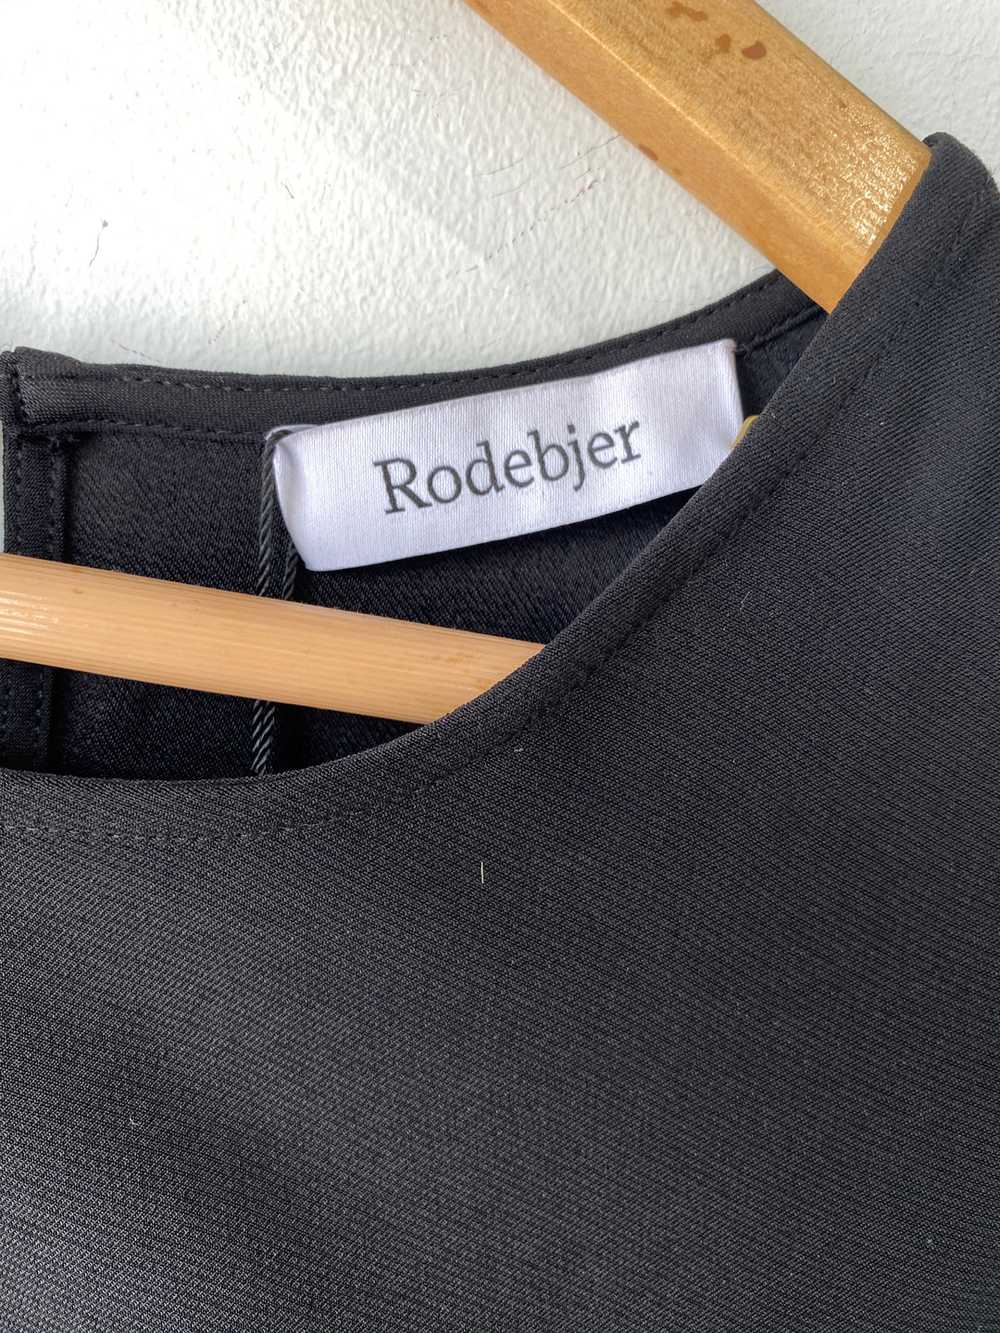 Rodebjer Black Dress - image 7